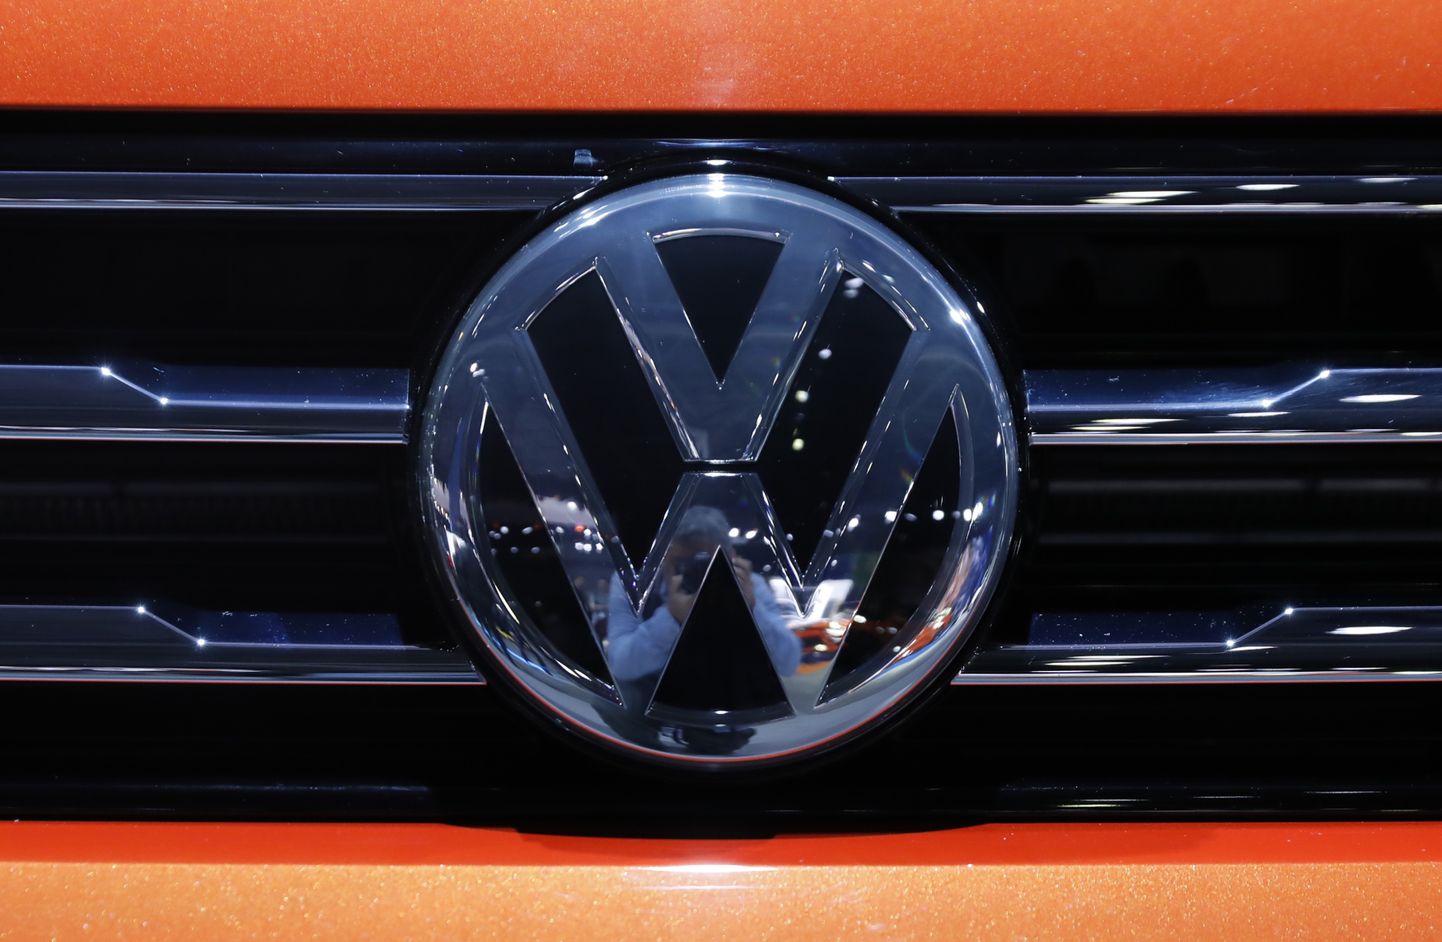 Volkswageni logo.